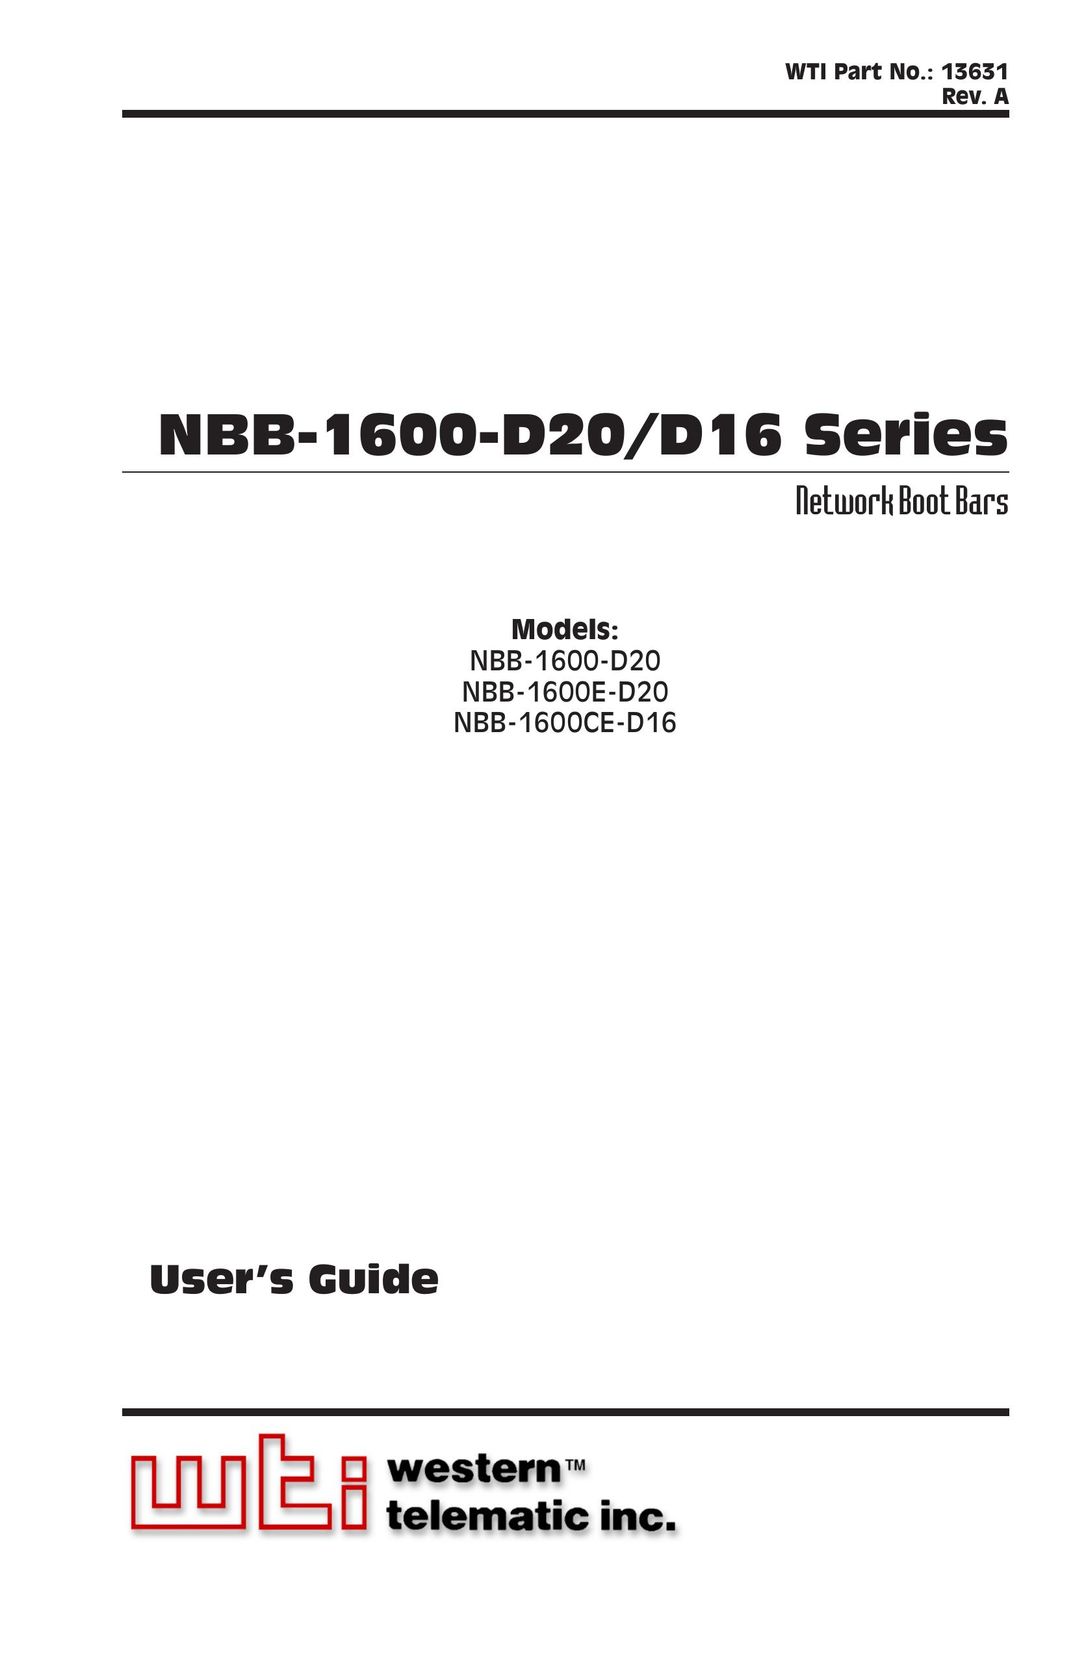 Western Telematic NBB-1600-D20, NBB-1600E-D20, NBB-1600CE-D16 Network Card User Manual